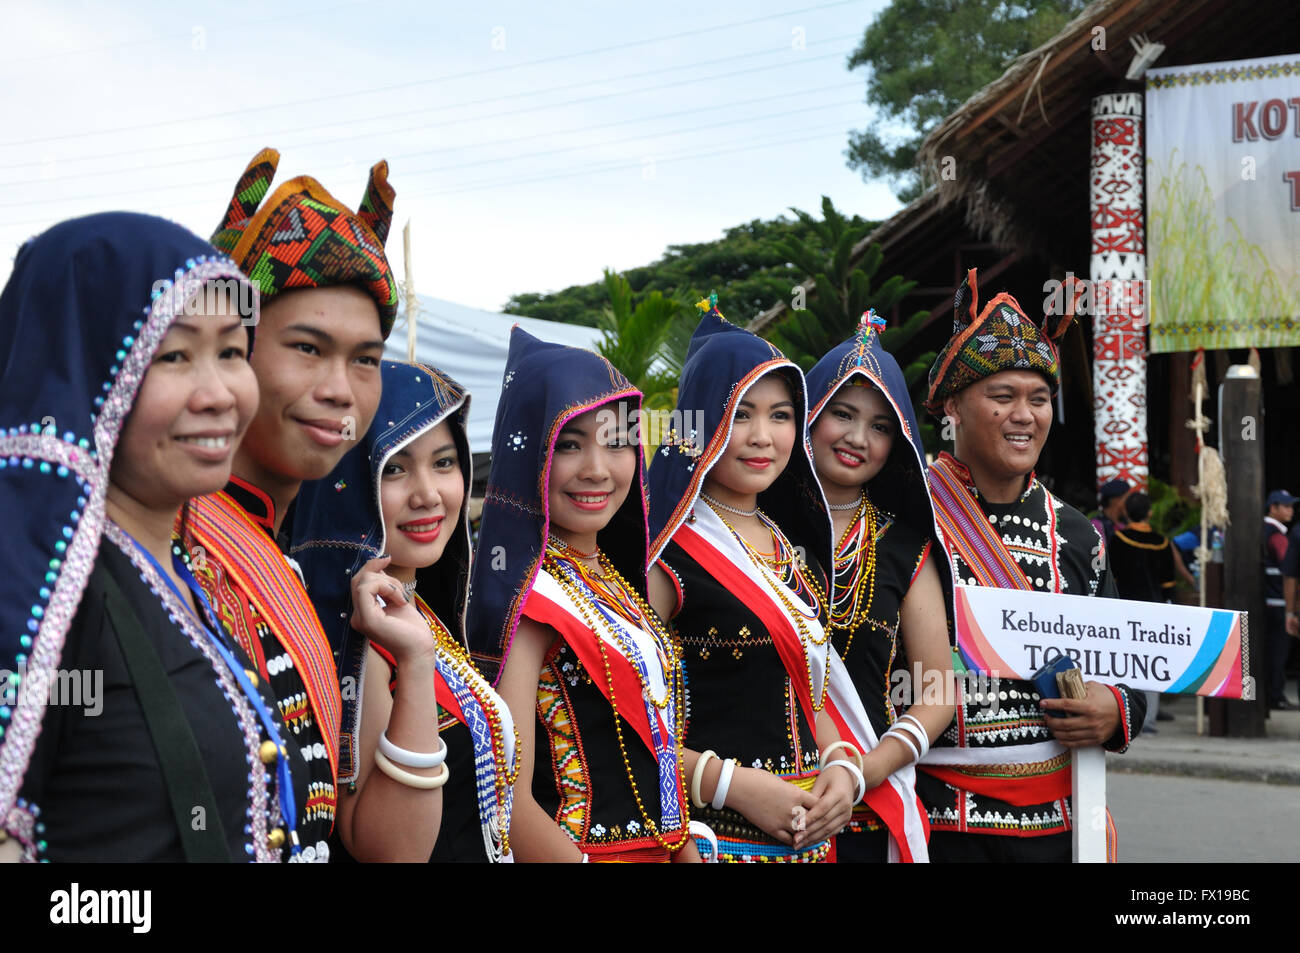 Kadazan dusun tribe in traditional costume during Sabah Harvest festival celebration in Kota Kinabalu, sabah Borneo, Malaysia. Stock Photo